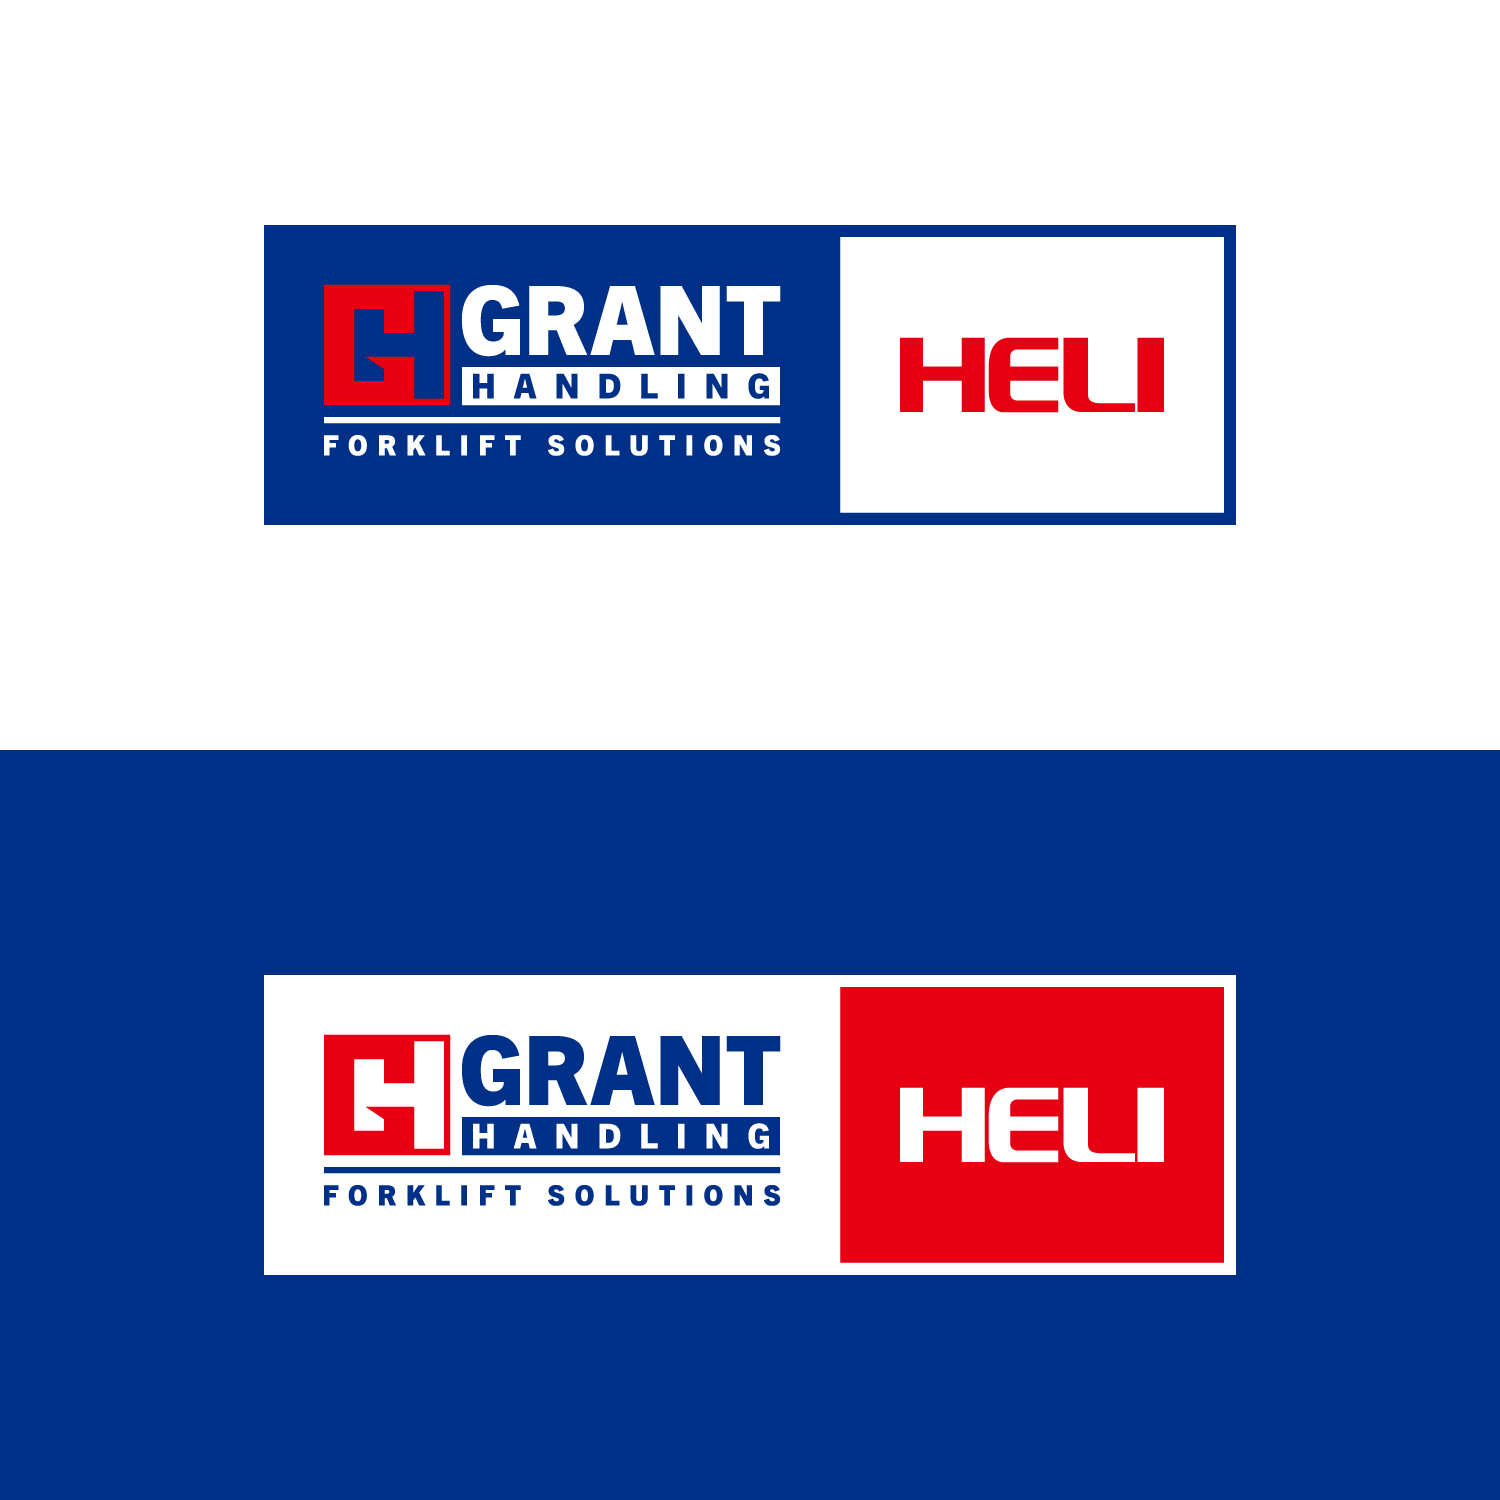 Grant Handling logo